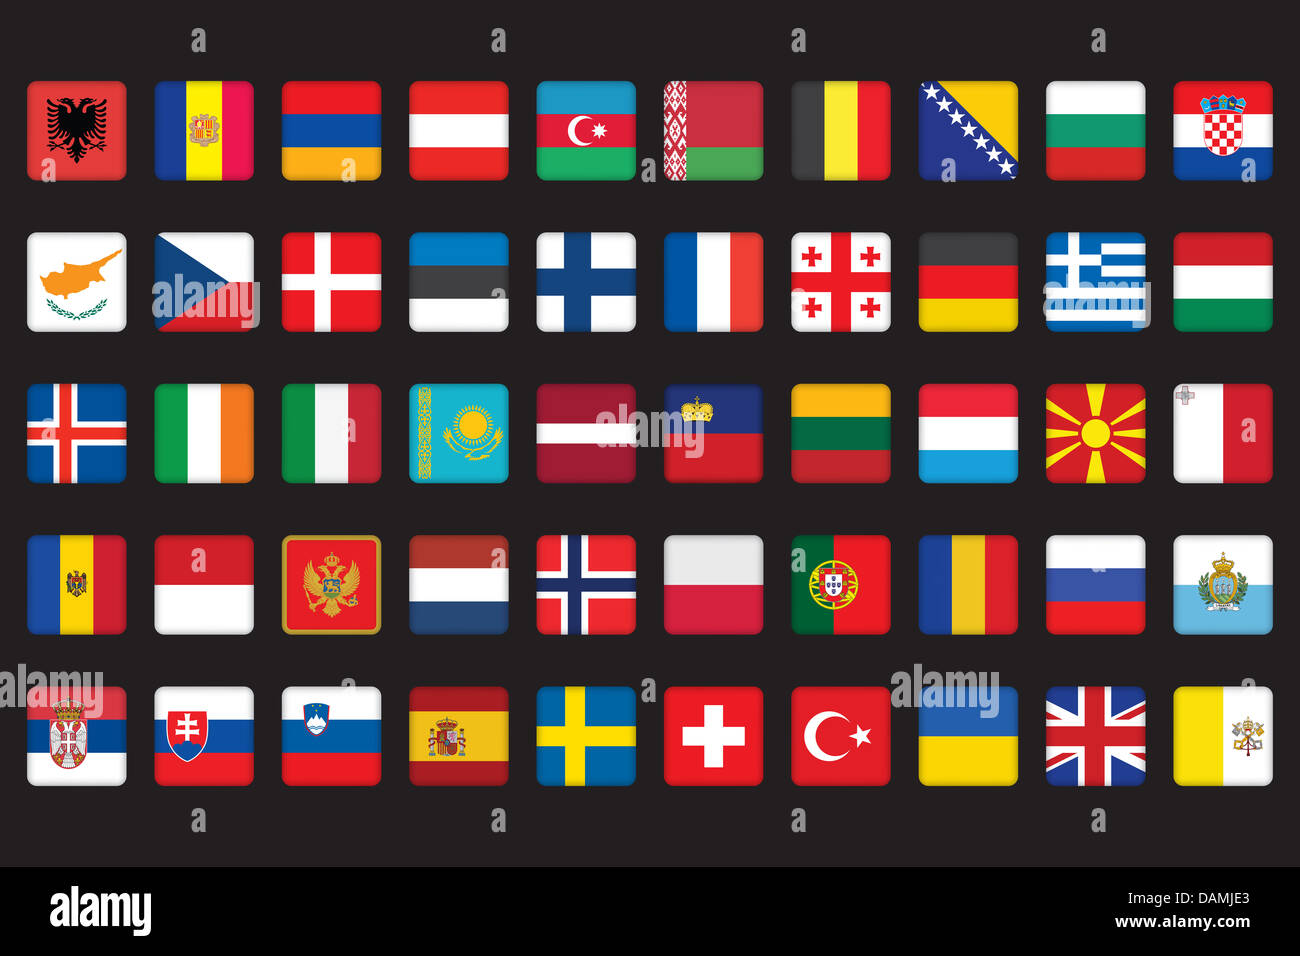 Флаг страны квадратной формы. Флаги Европы. Флаги европейских государств. Национальные флаги Европы. Флаги европейских стран.